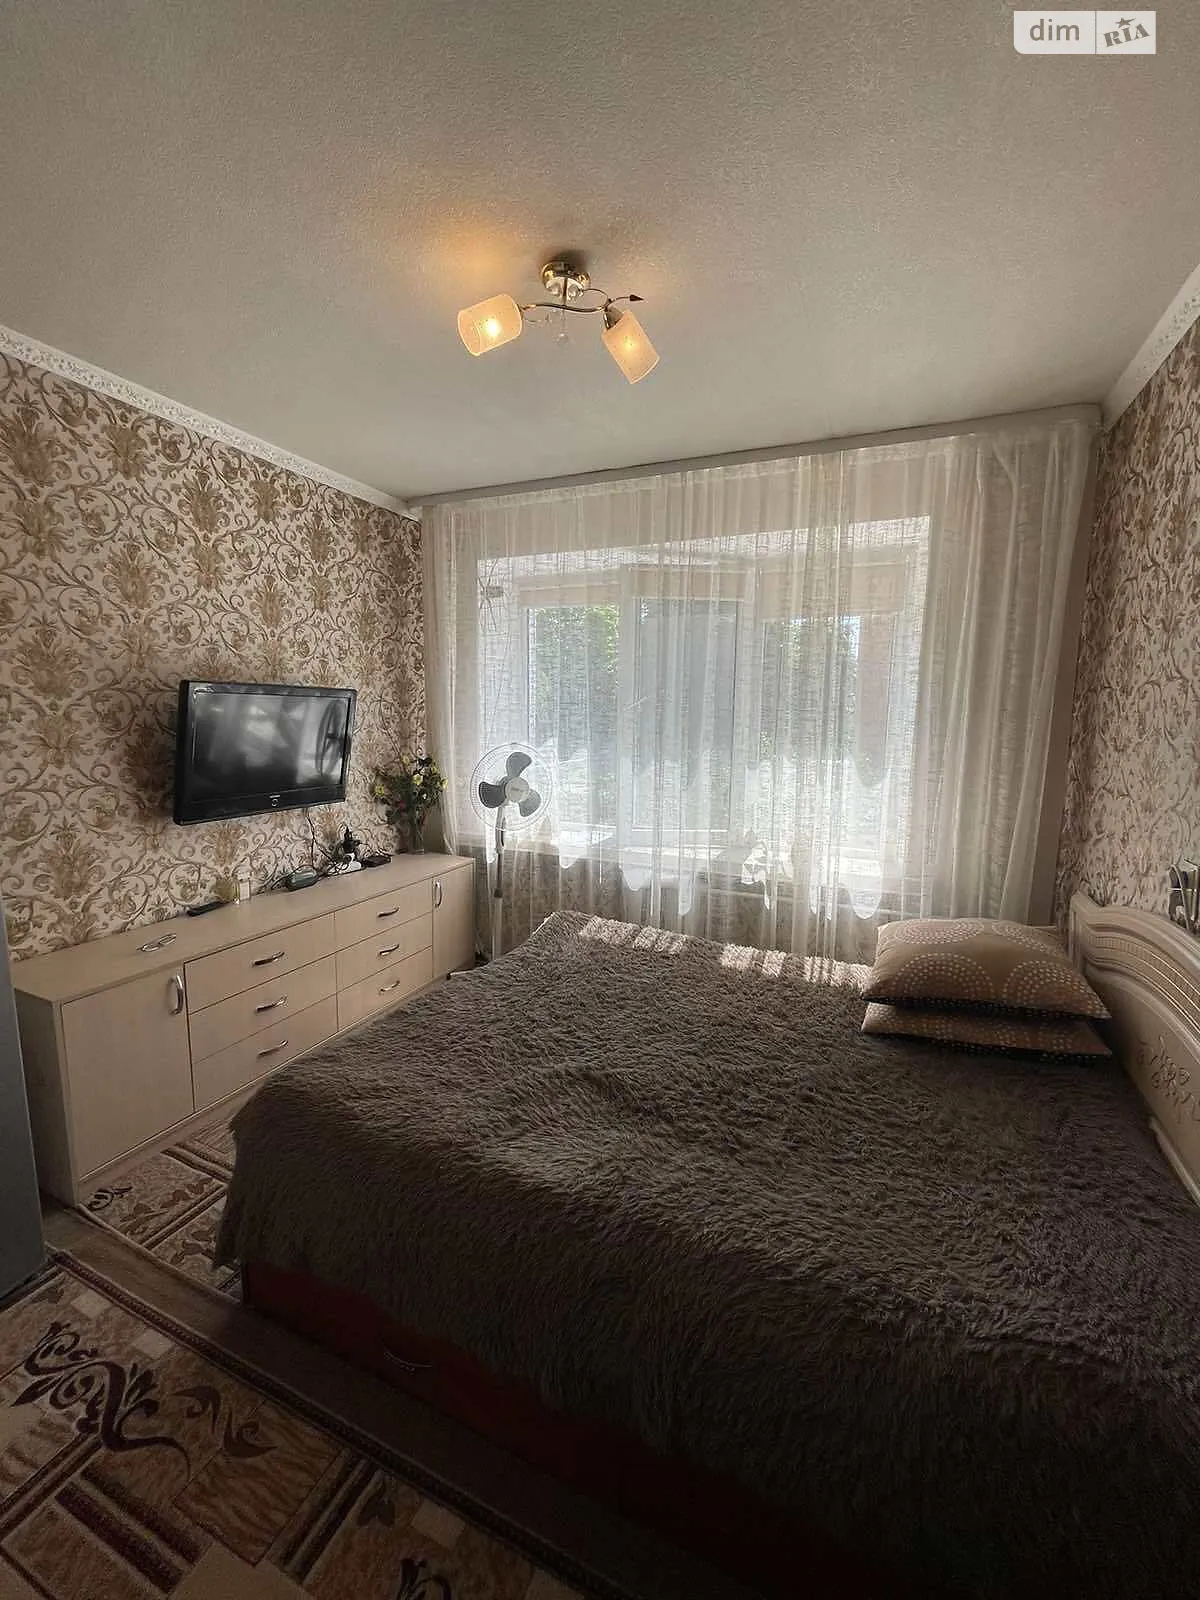 Продается комната 34 кв. м в Ровно - фото 3